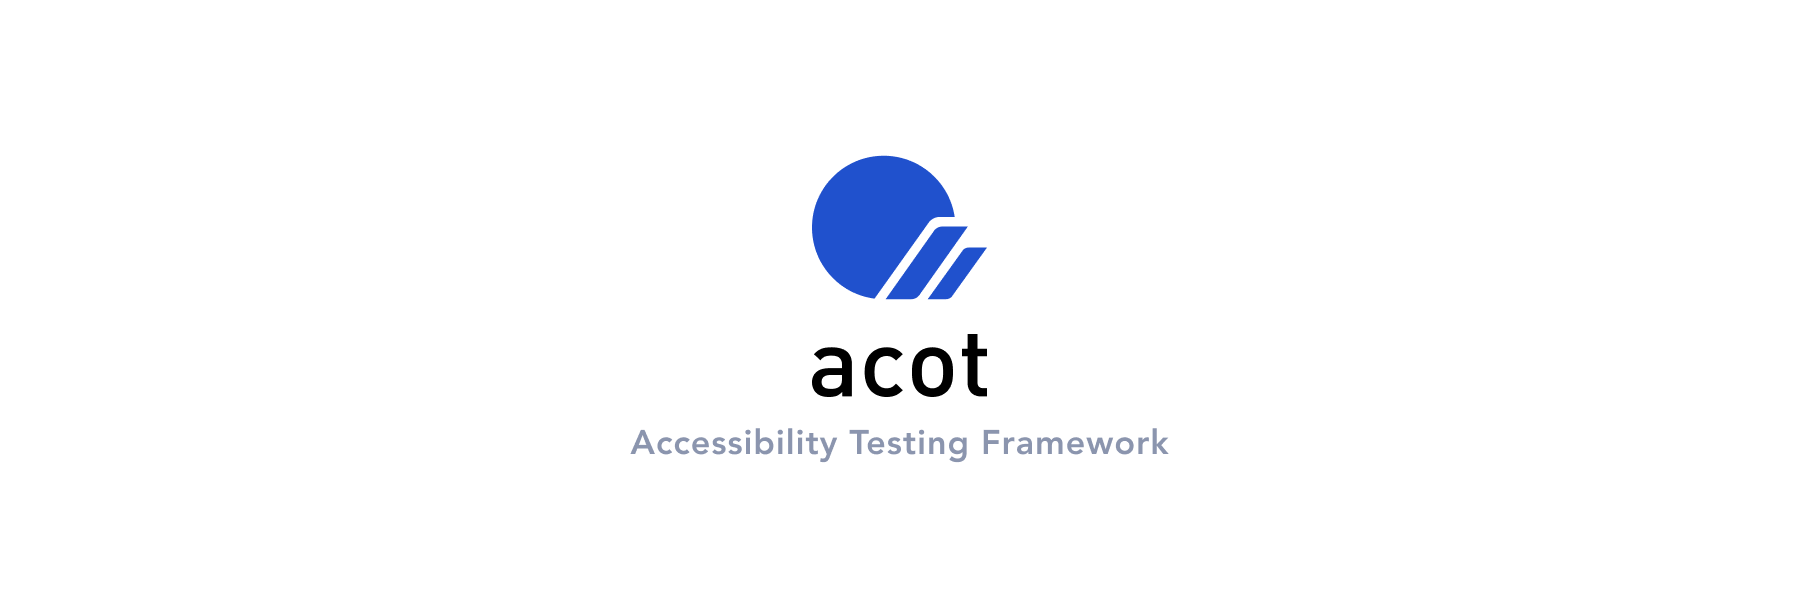 acot - Accessibility Testing Framework